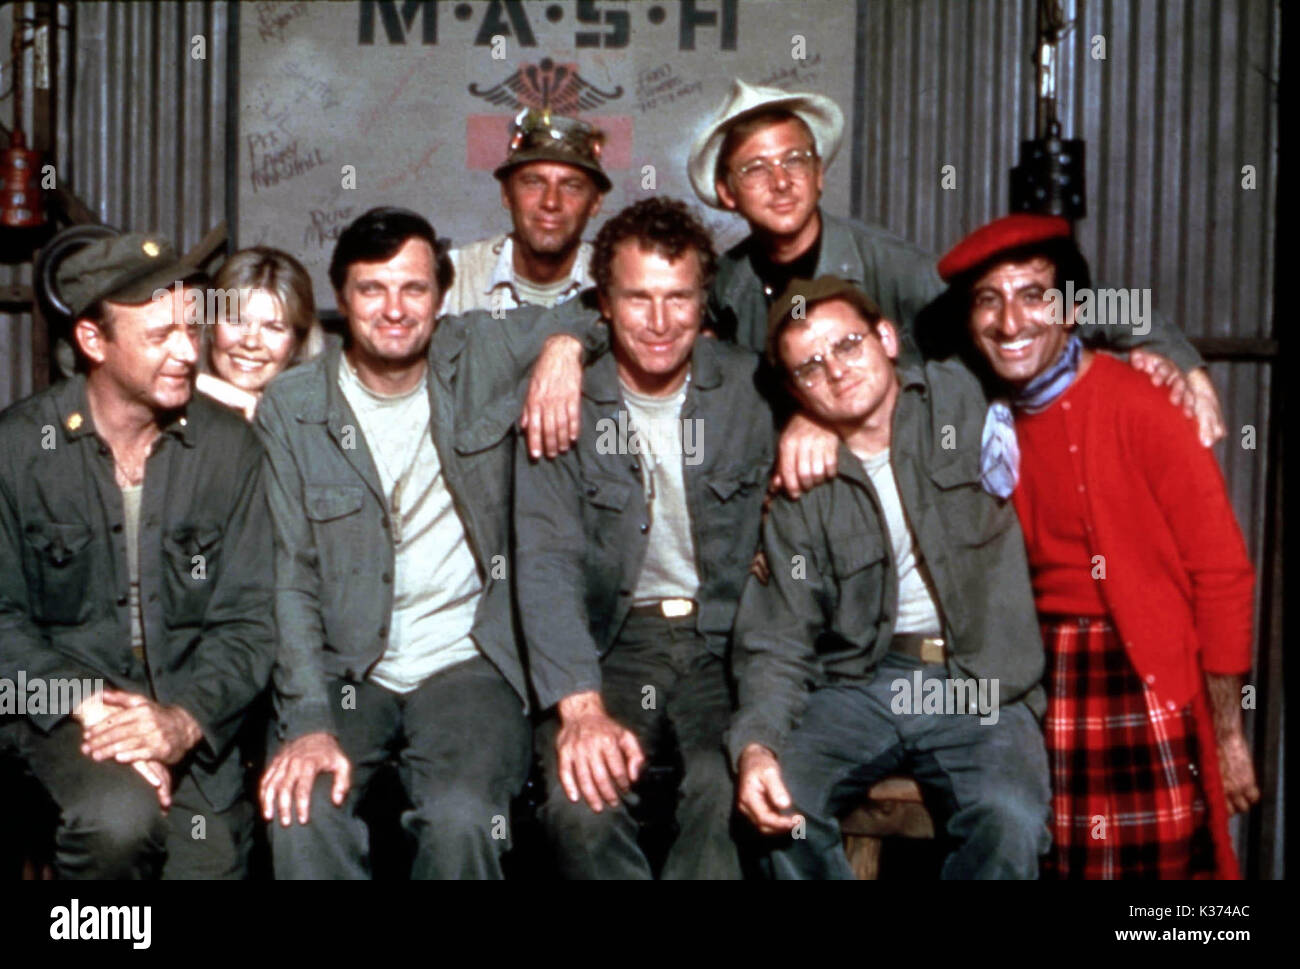 M*A*S*H [US-TV-Serien 1972 -1983] aka MASH JAMES FARR als Corporal Kinger, Gary Burghoff als Radar, Loretta Swit als wichtige 'Hot Lips' O'Houlihan M*A*S*H [US-TV-Serien 1972 -1983] aka MASH [L - R] Larry Linville als Major Frank Burns, Loretta Swit als wichtige 'Hot Lips' O'Houlihan, Alan Alda als Kapitän 'Hawkeye' Pierce, MCLEAN STEVENSON als Lt Colonel Henry Blake, Wayne Rogers als Kapitän 'Trapper John' Mcintyre, William Christopher als Father Mulcahy, Gary Burghoff als Radar, JAMES FARR als Corporal Kinger Stockfoto